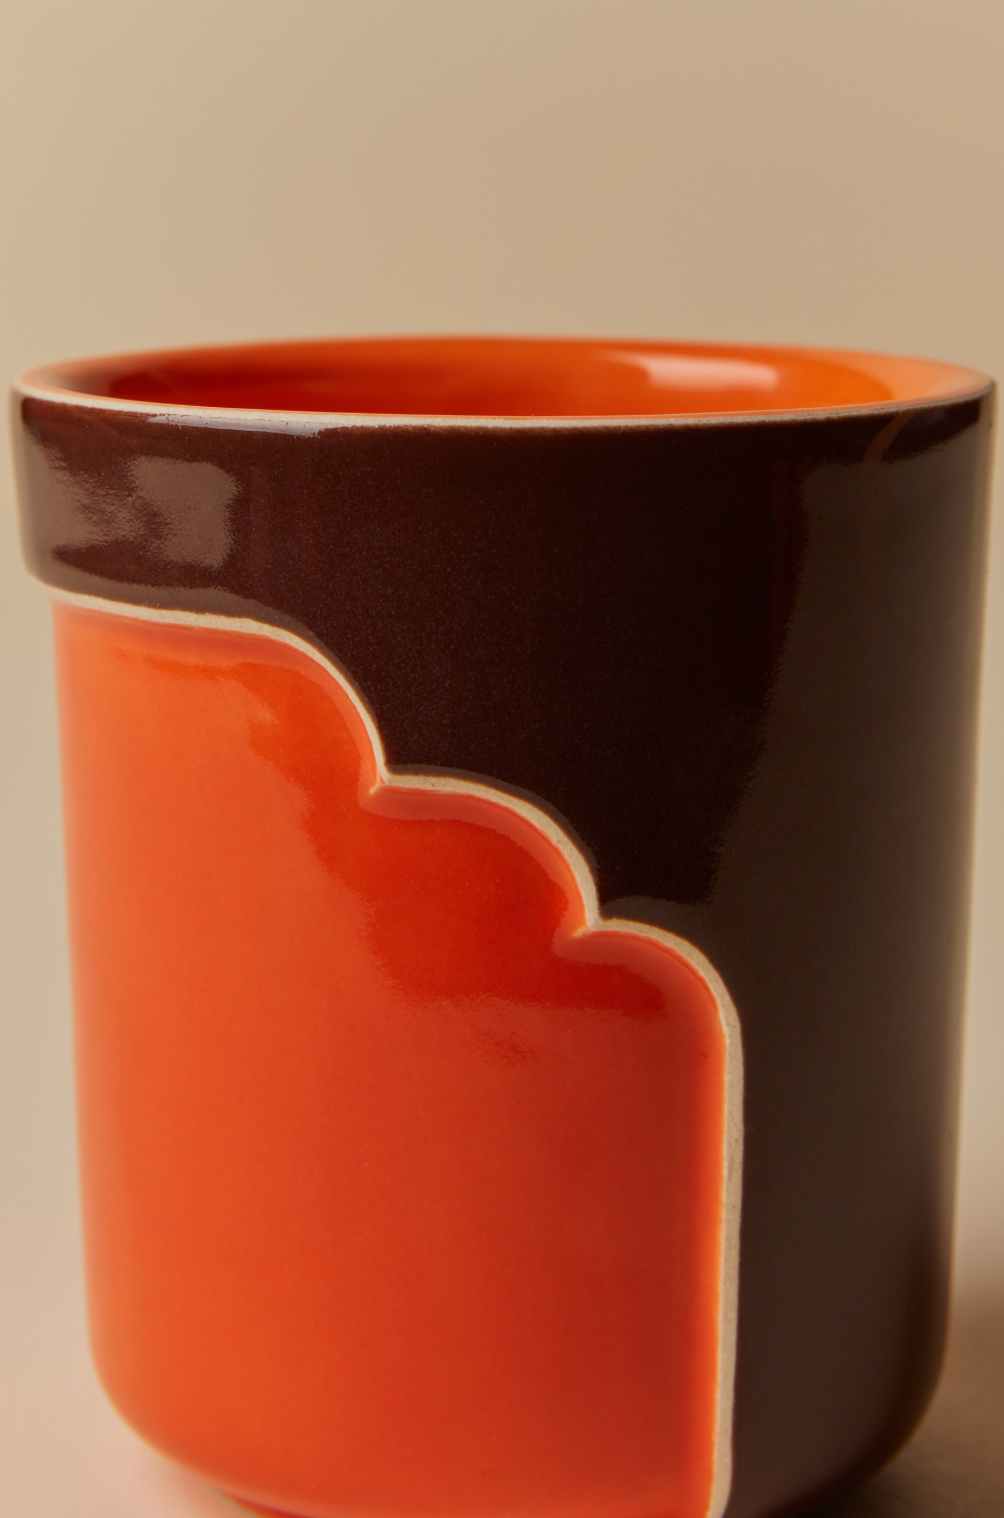 Yuro Cuchor – 70's Cup, Dark Brown and Orange